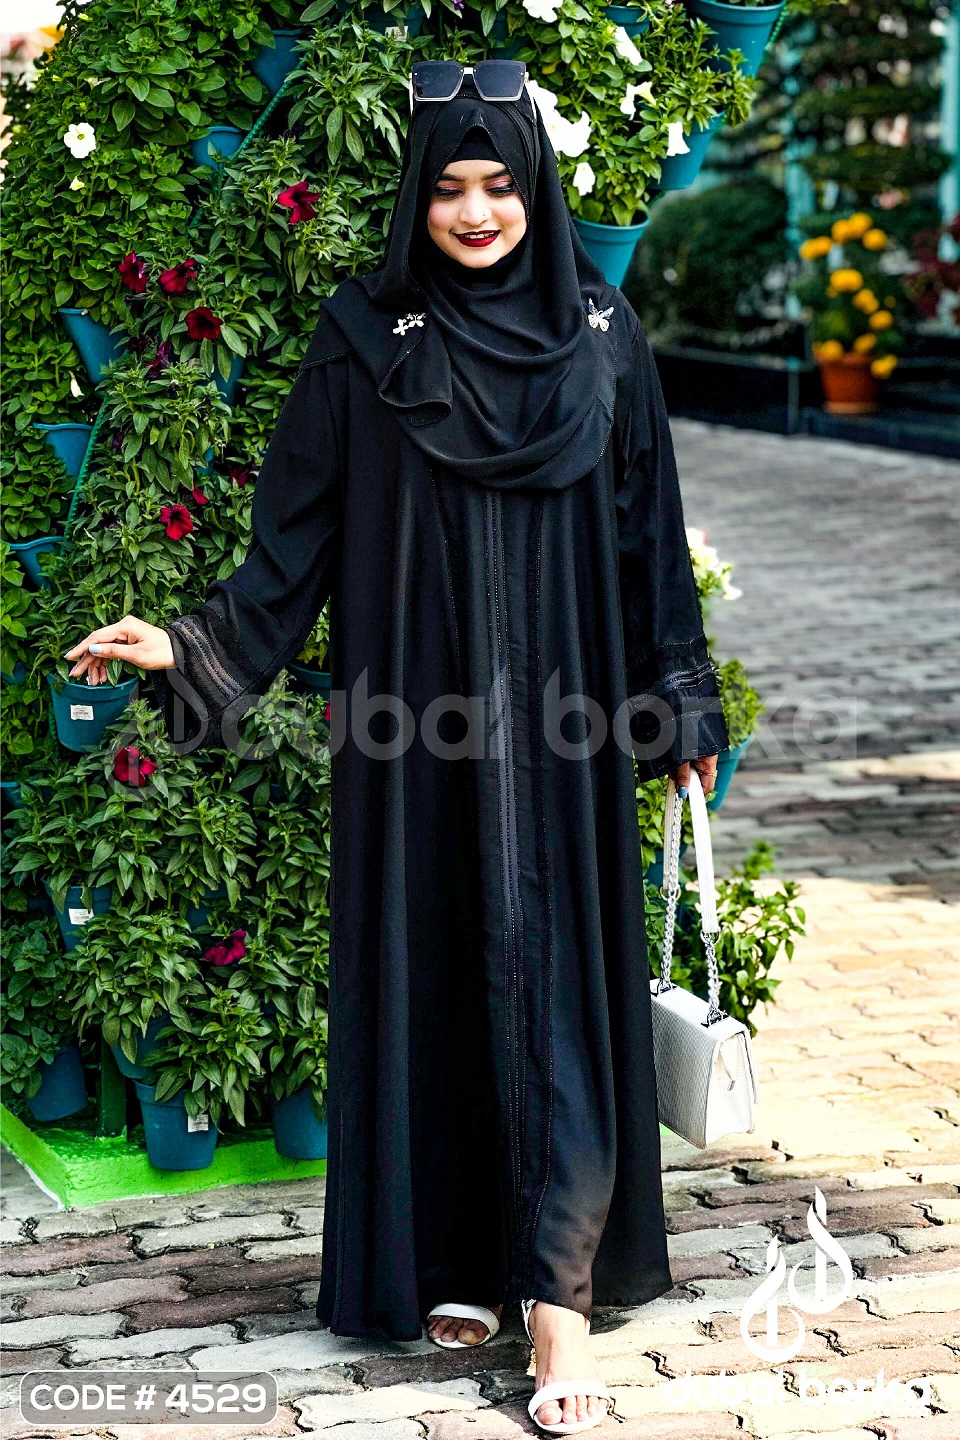 Fida Borka with Hijab